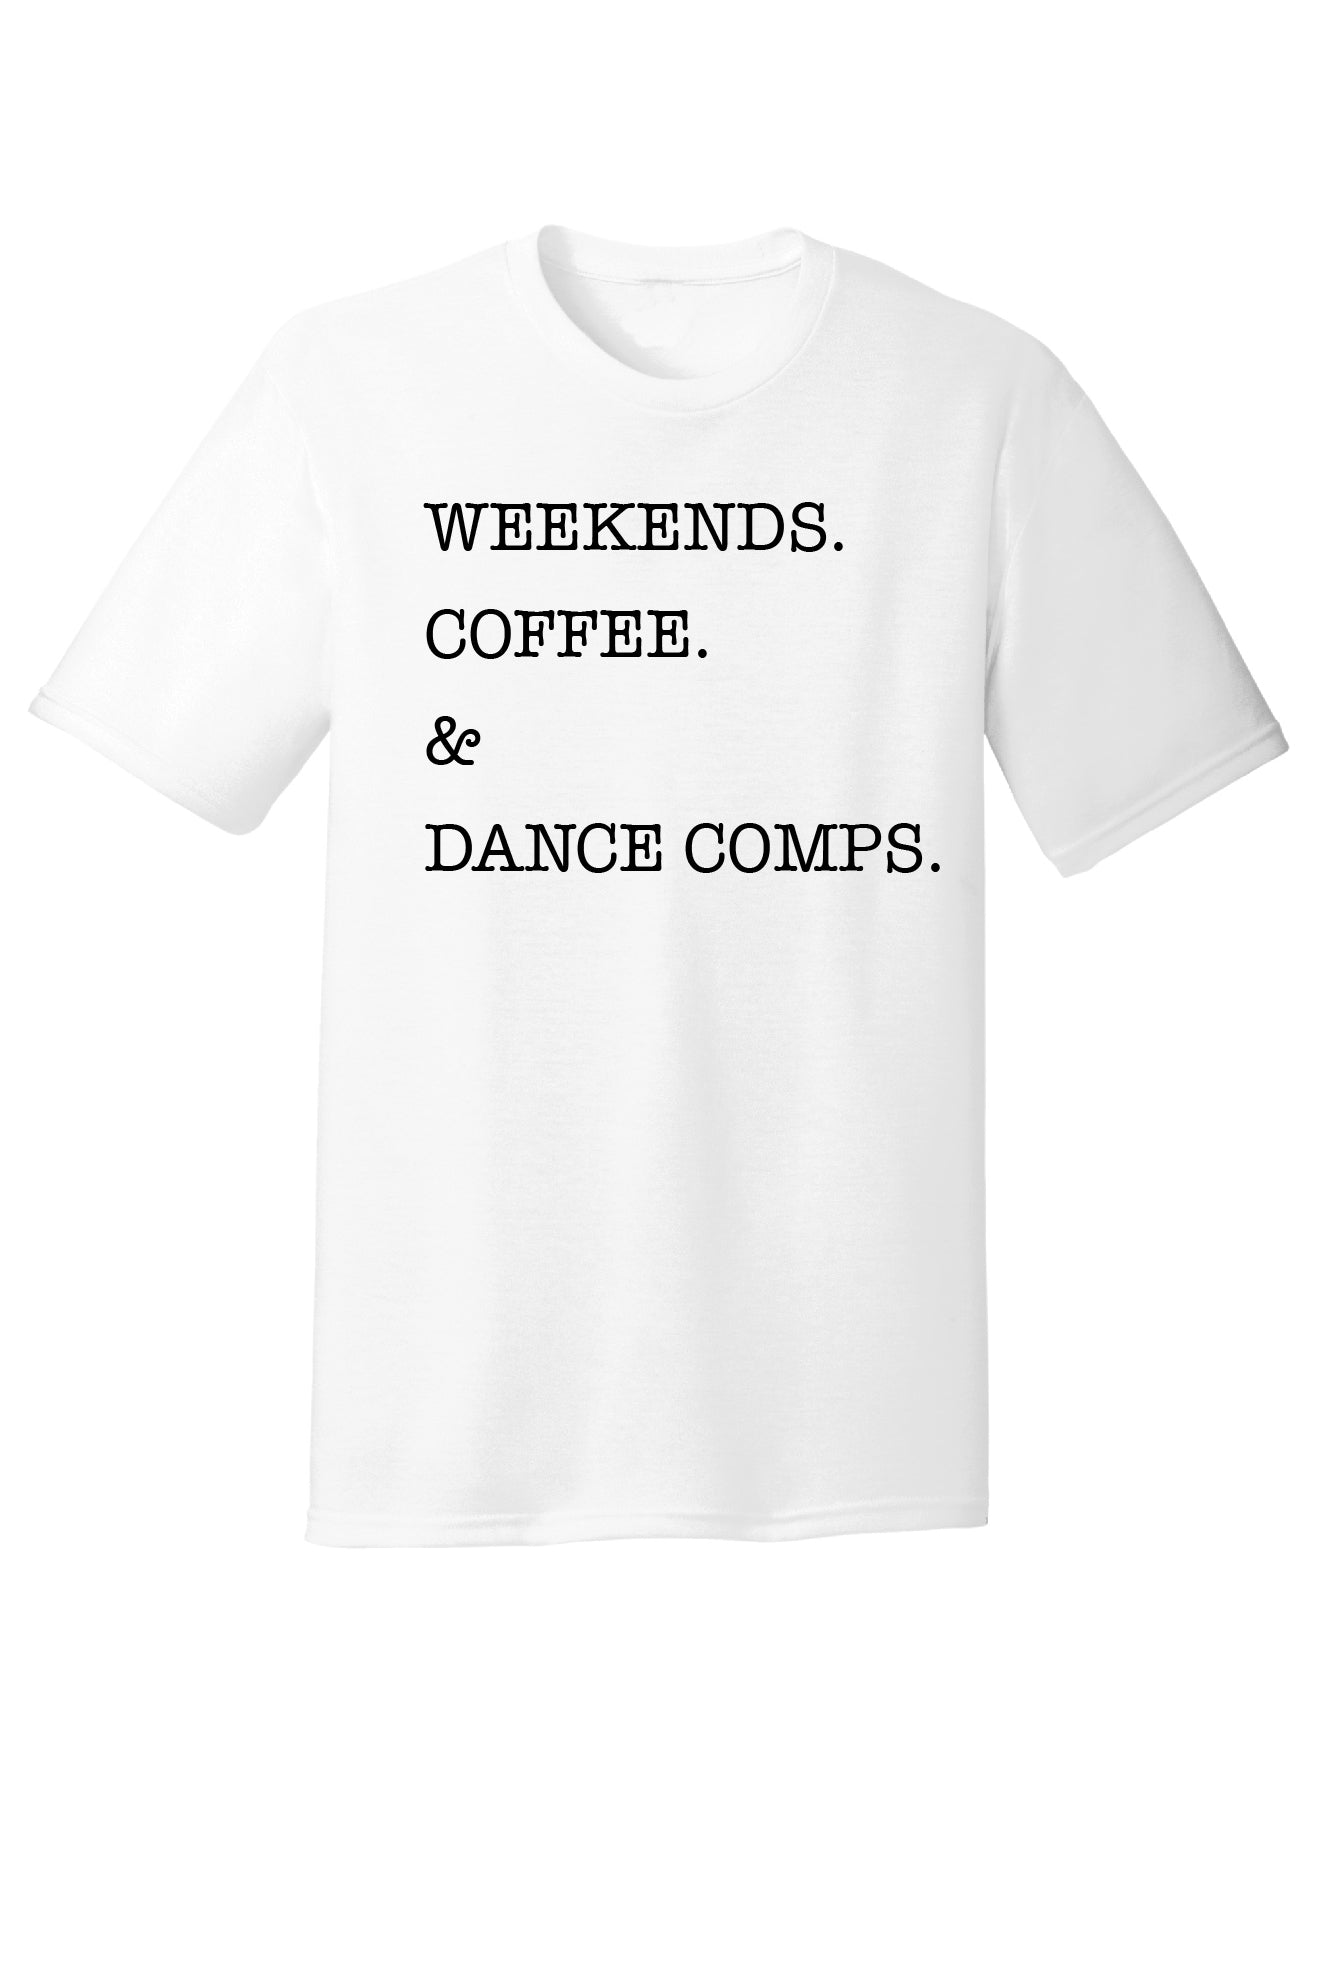 Coffee. Weekends. & Dance Comps. Tee